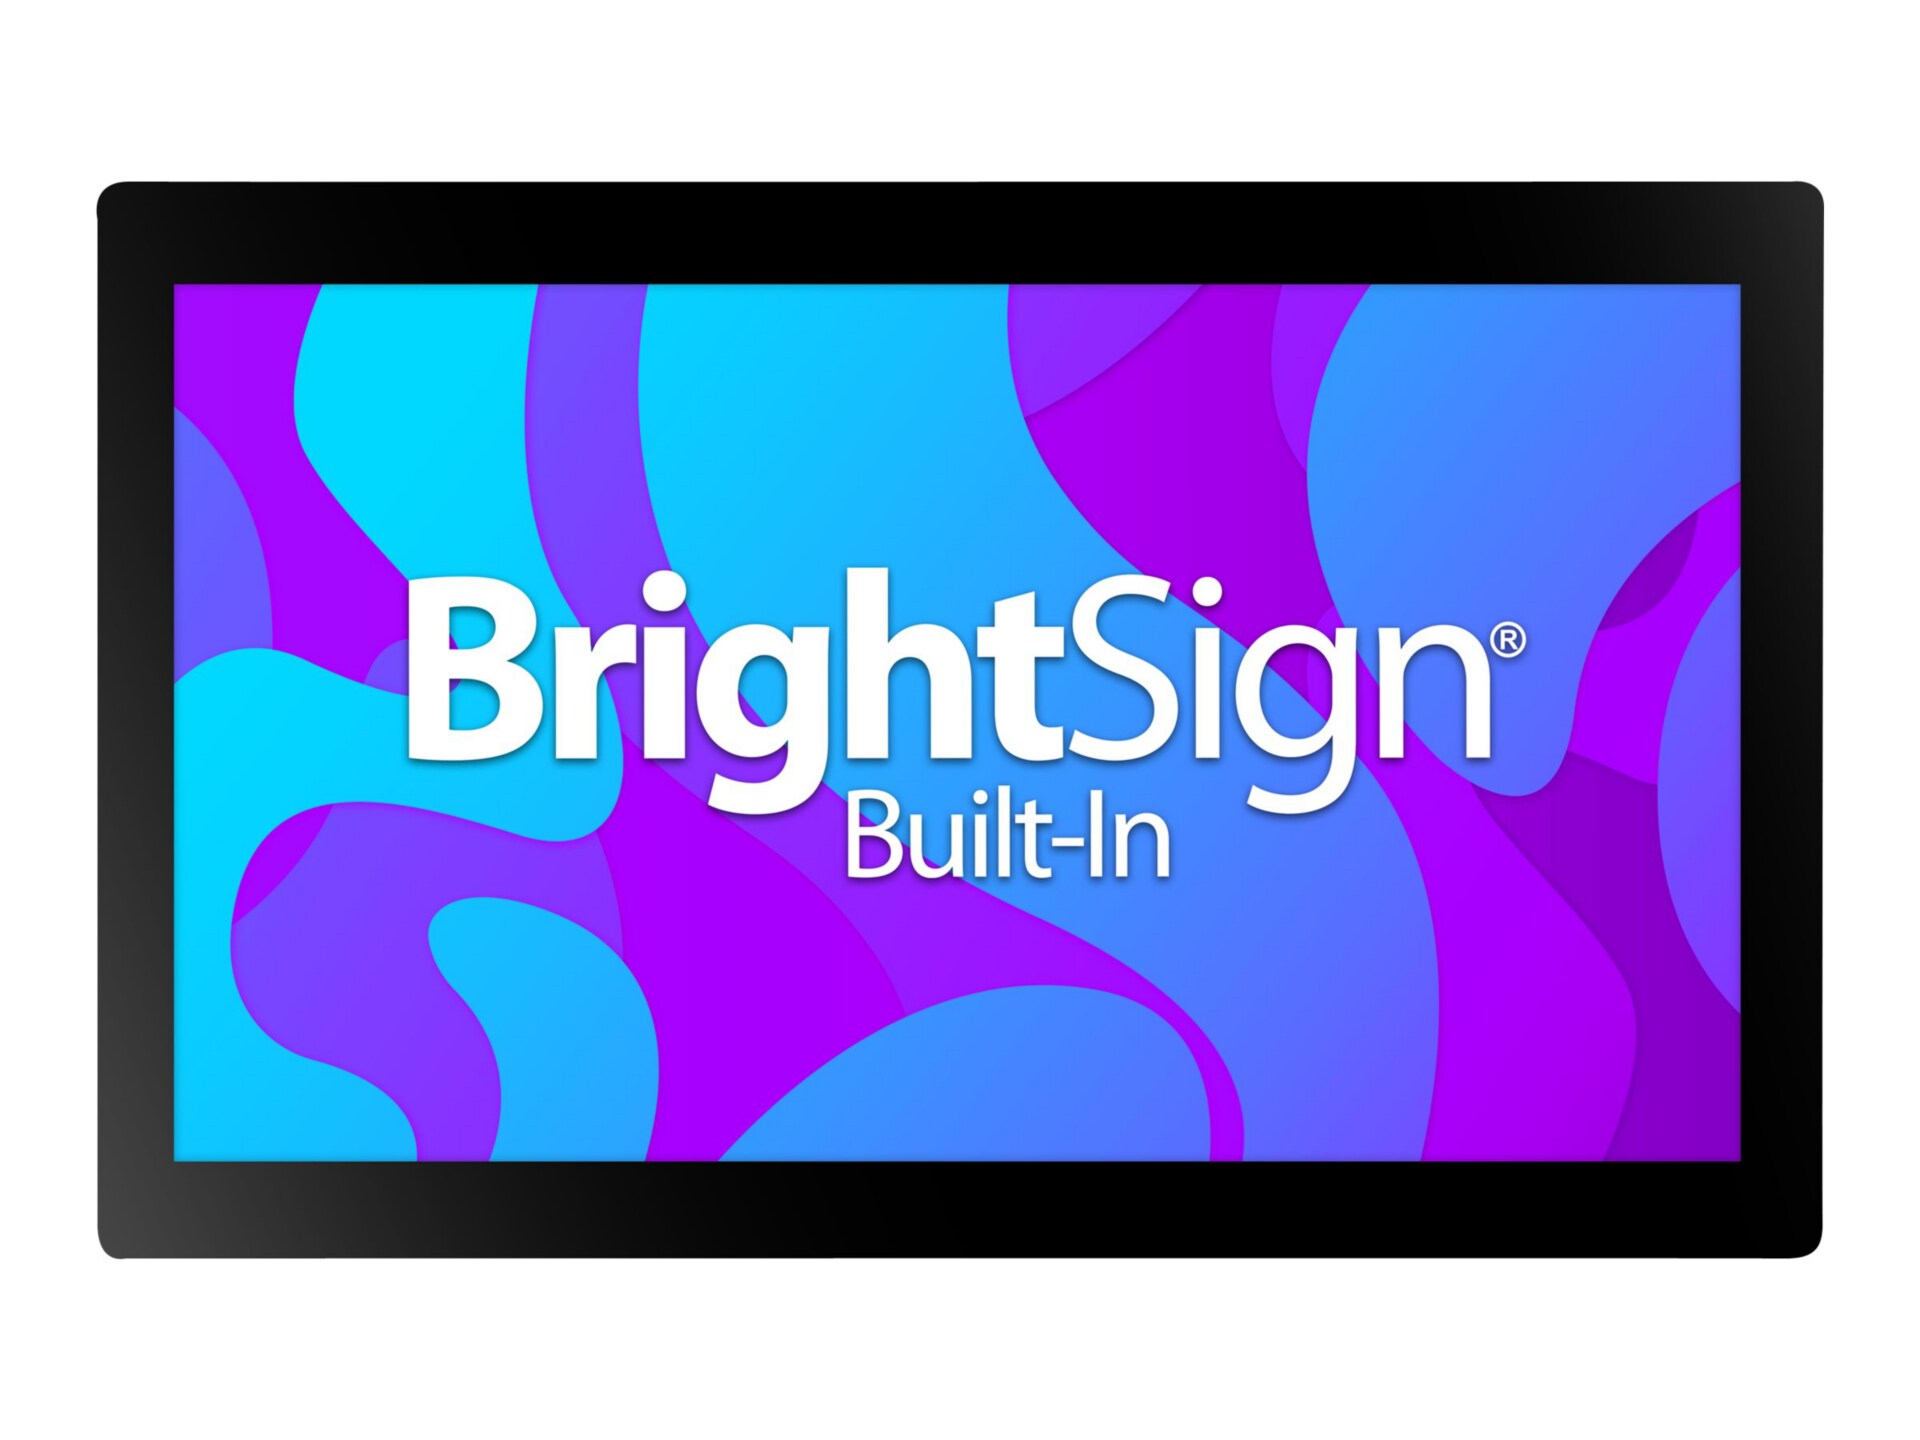 Bluefin BrightSign HS124 Series 15.6" LCD flat panel display - Full HD - fo